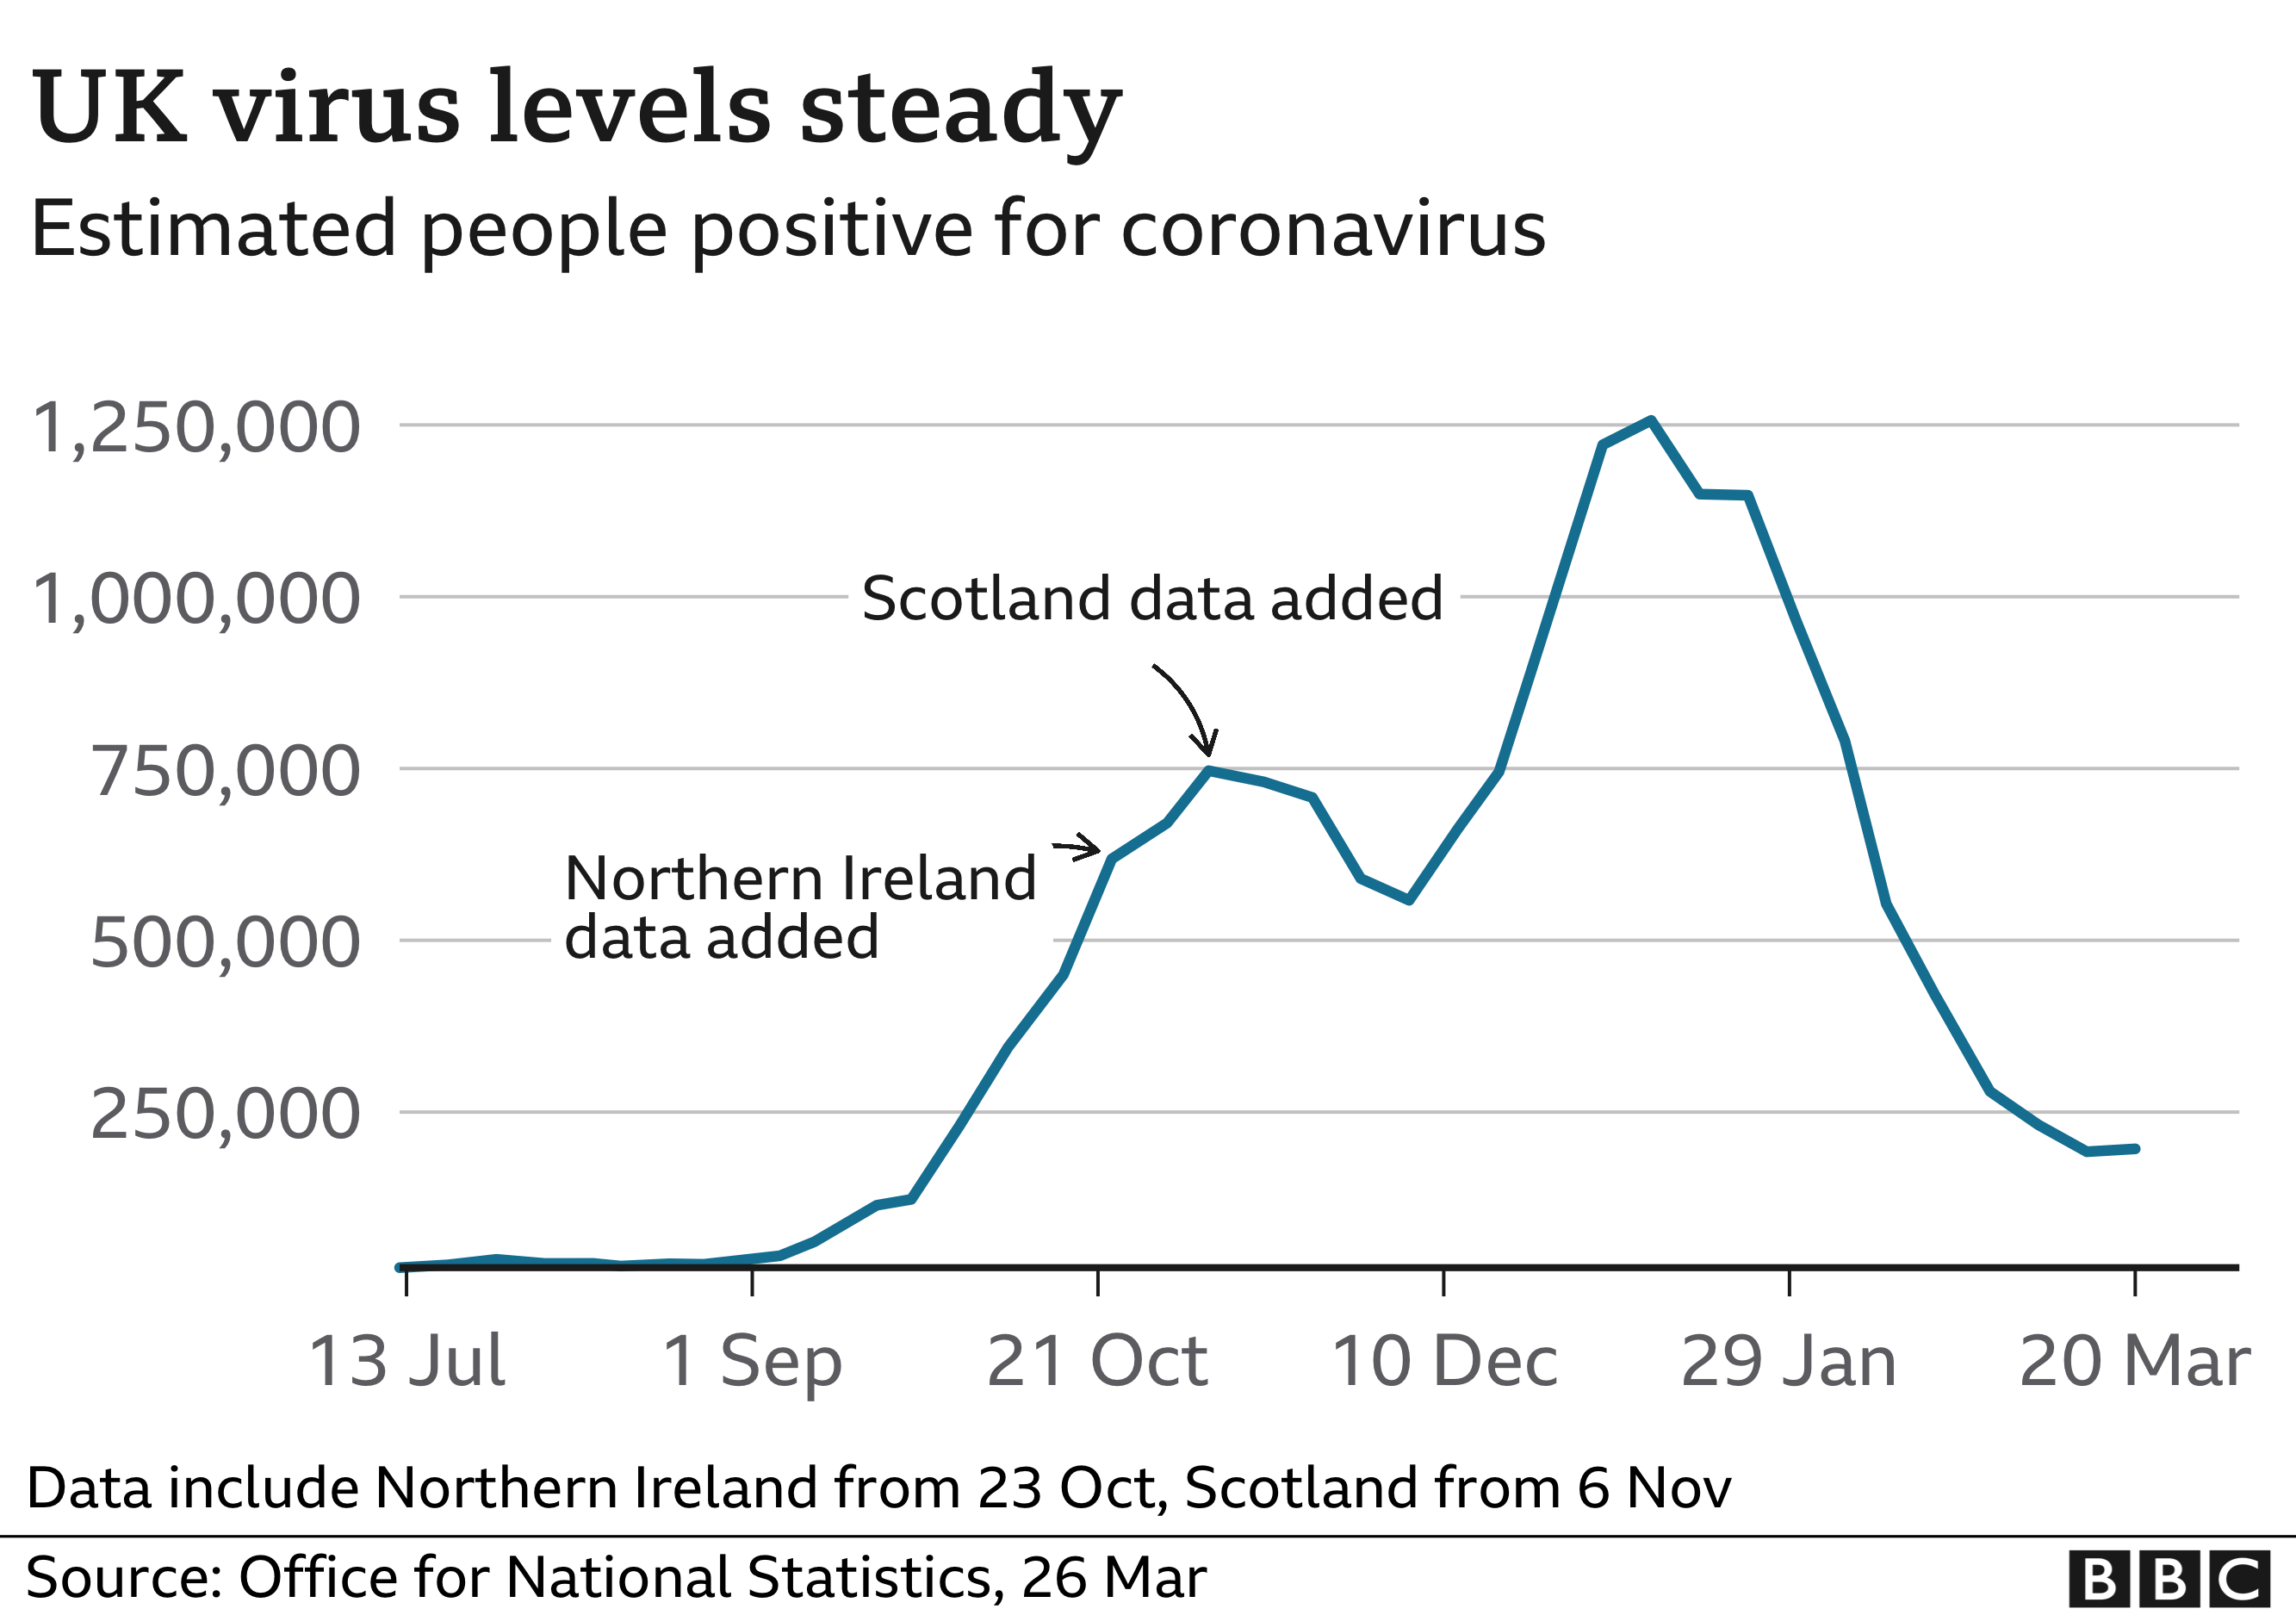 UK coronavirus levels are steady across most of UK